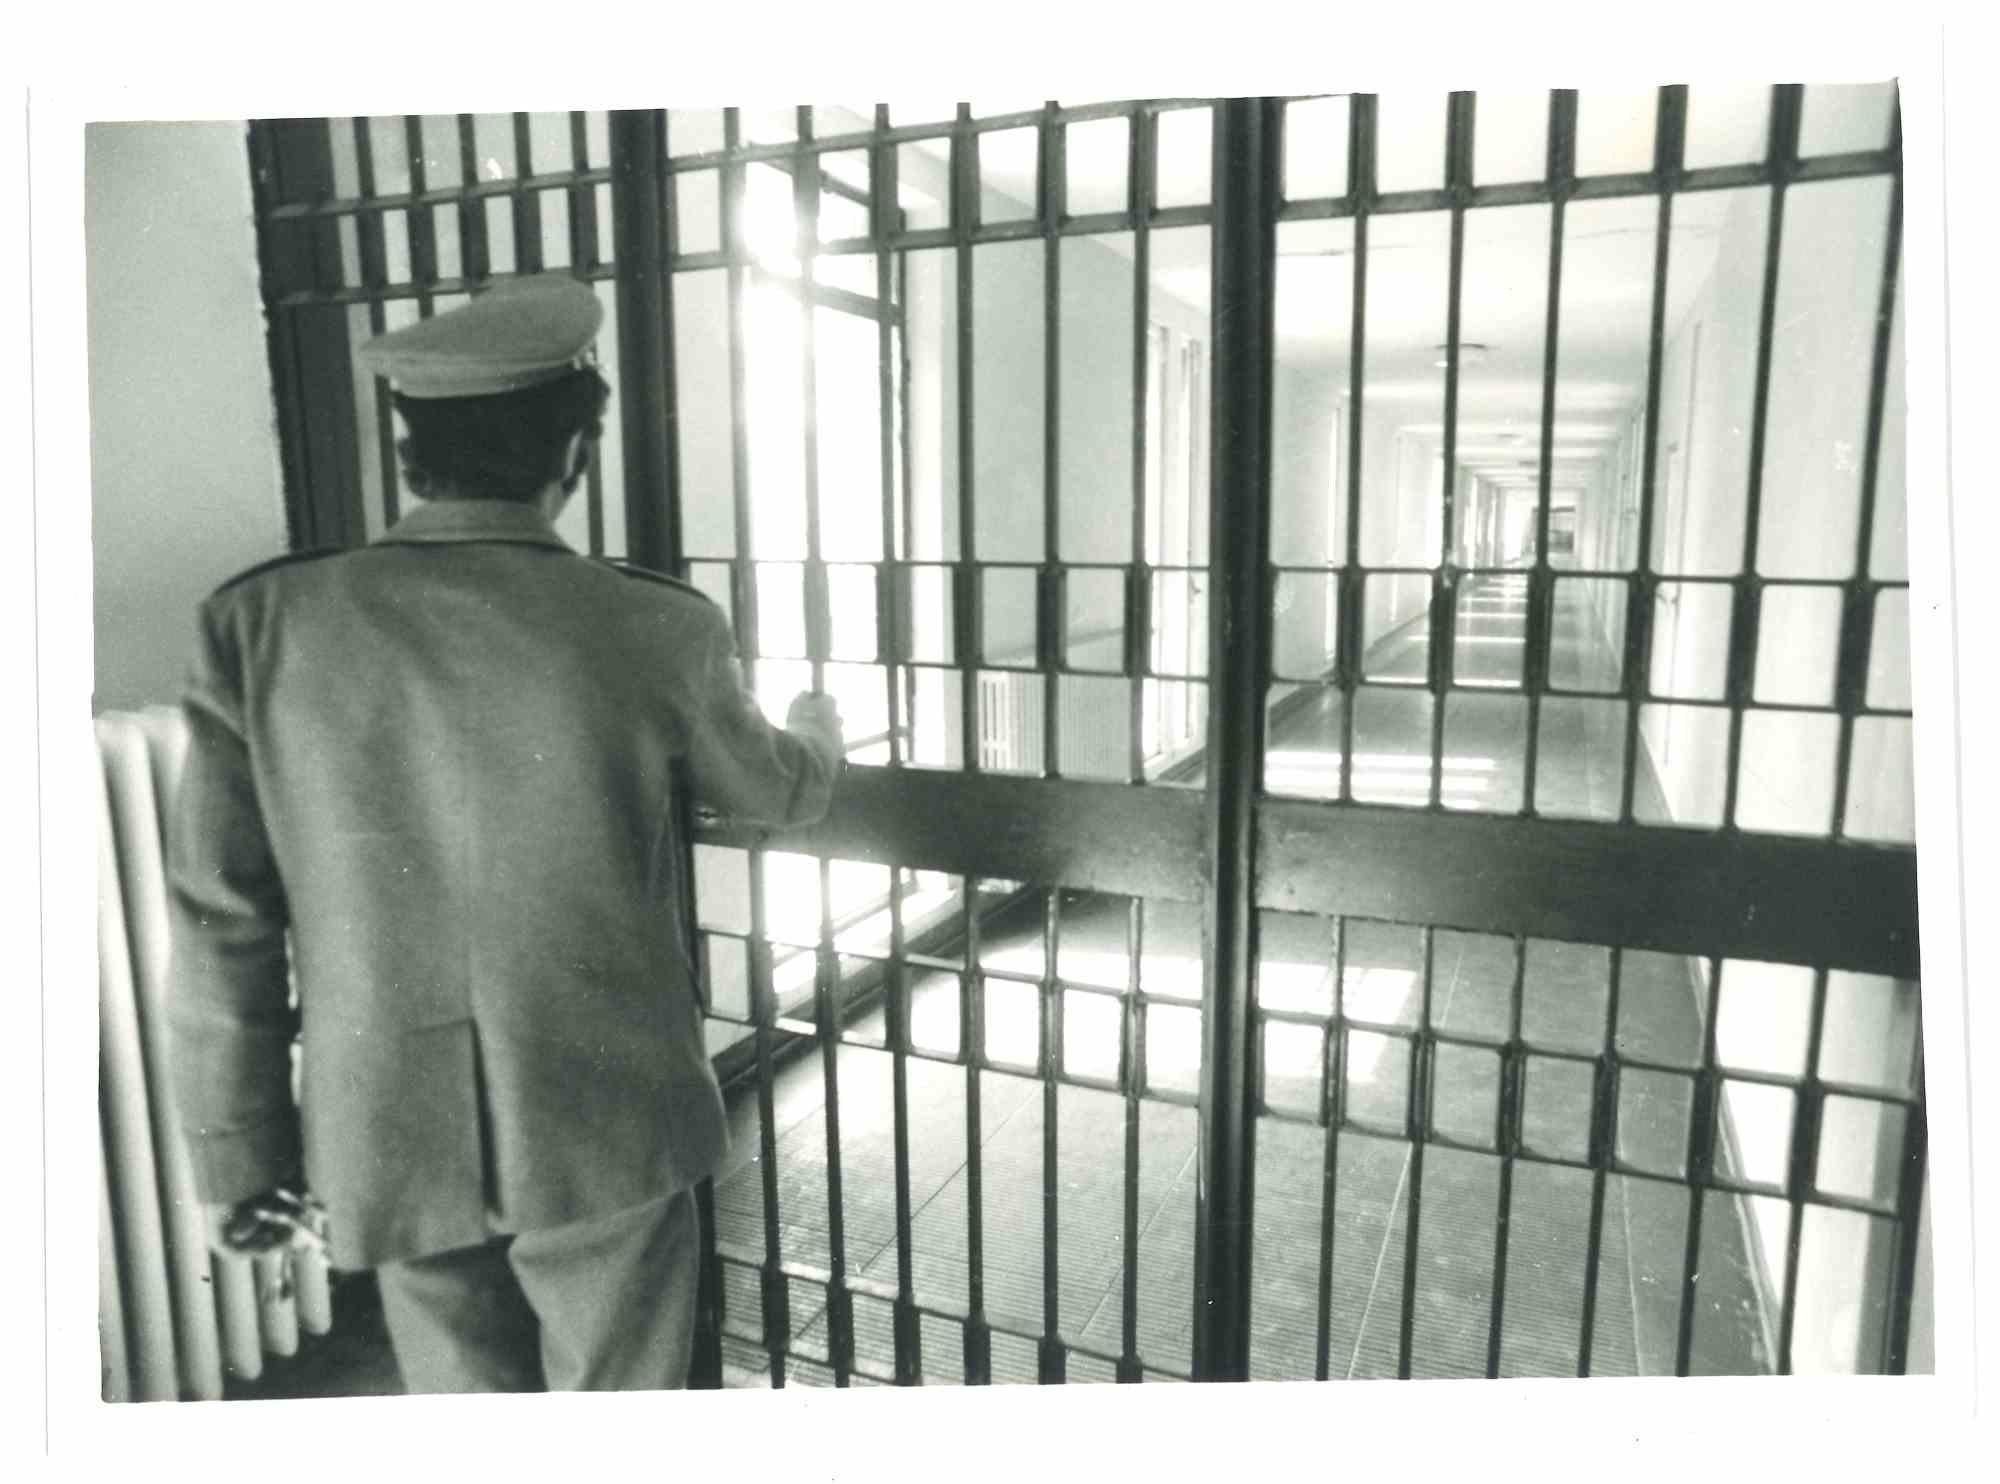 Unknown Landscape Photograph - Historical Photo of Prison  - 1970s